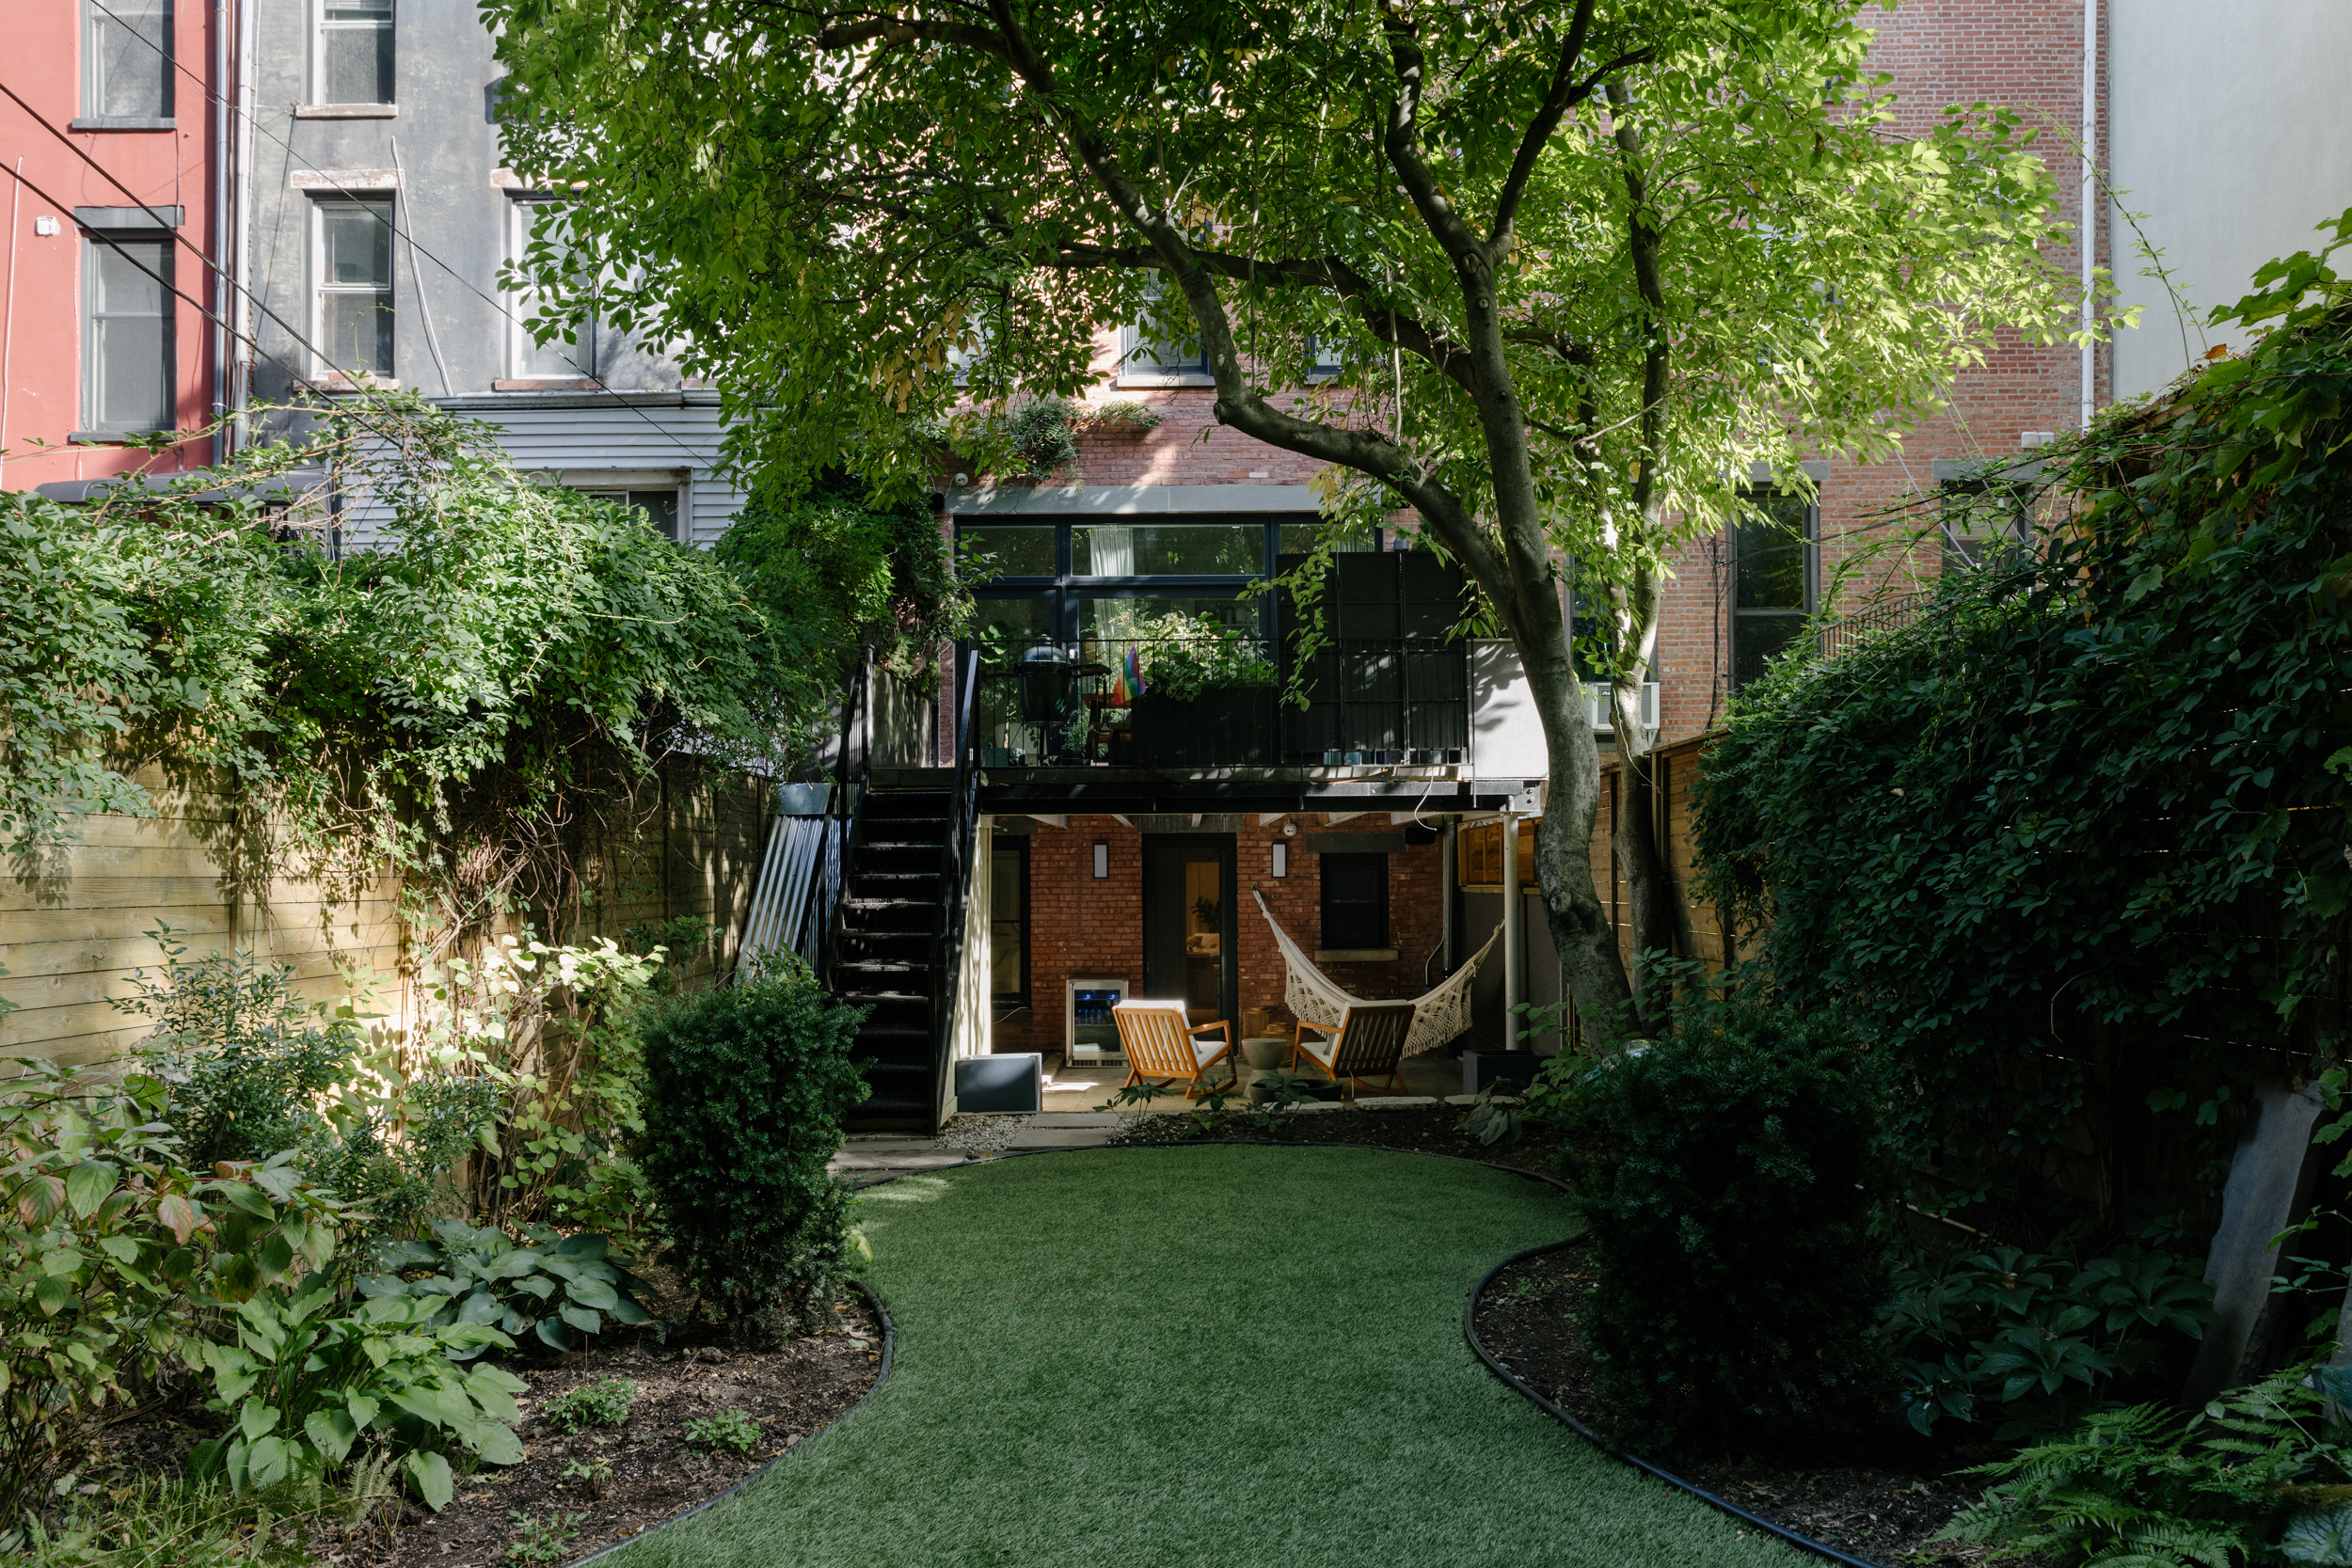 casa olympia backyard rental with patio, hammock, and various plants